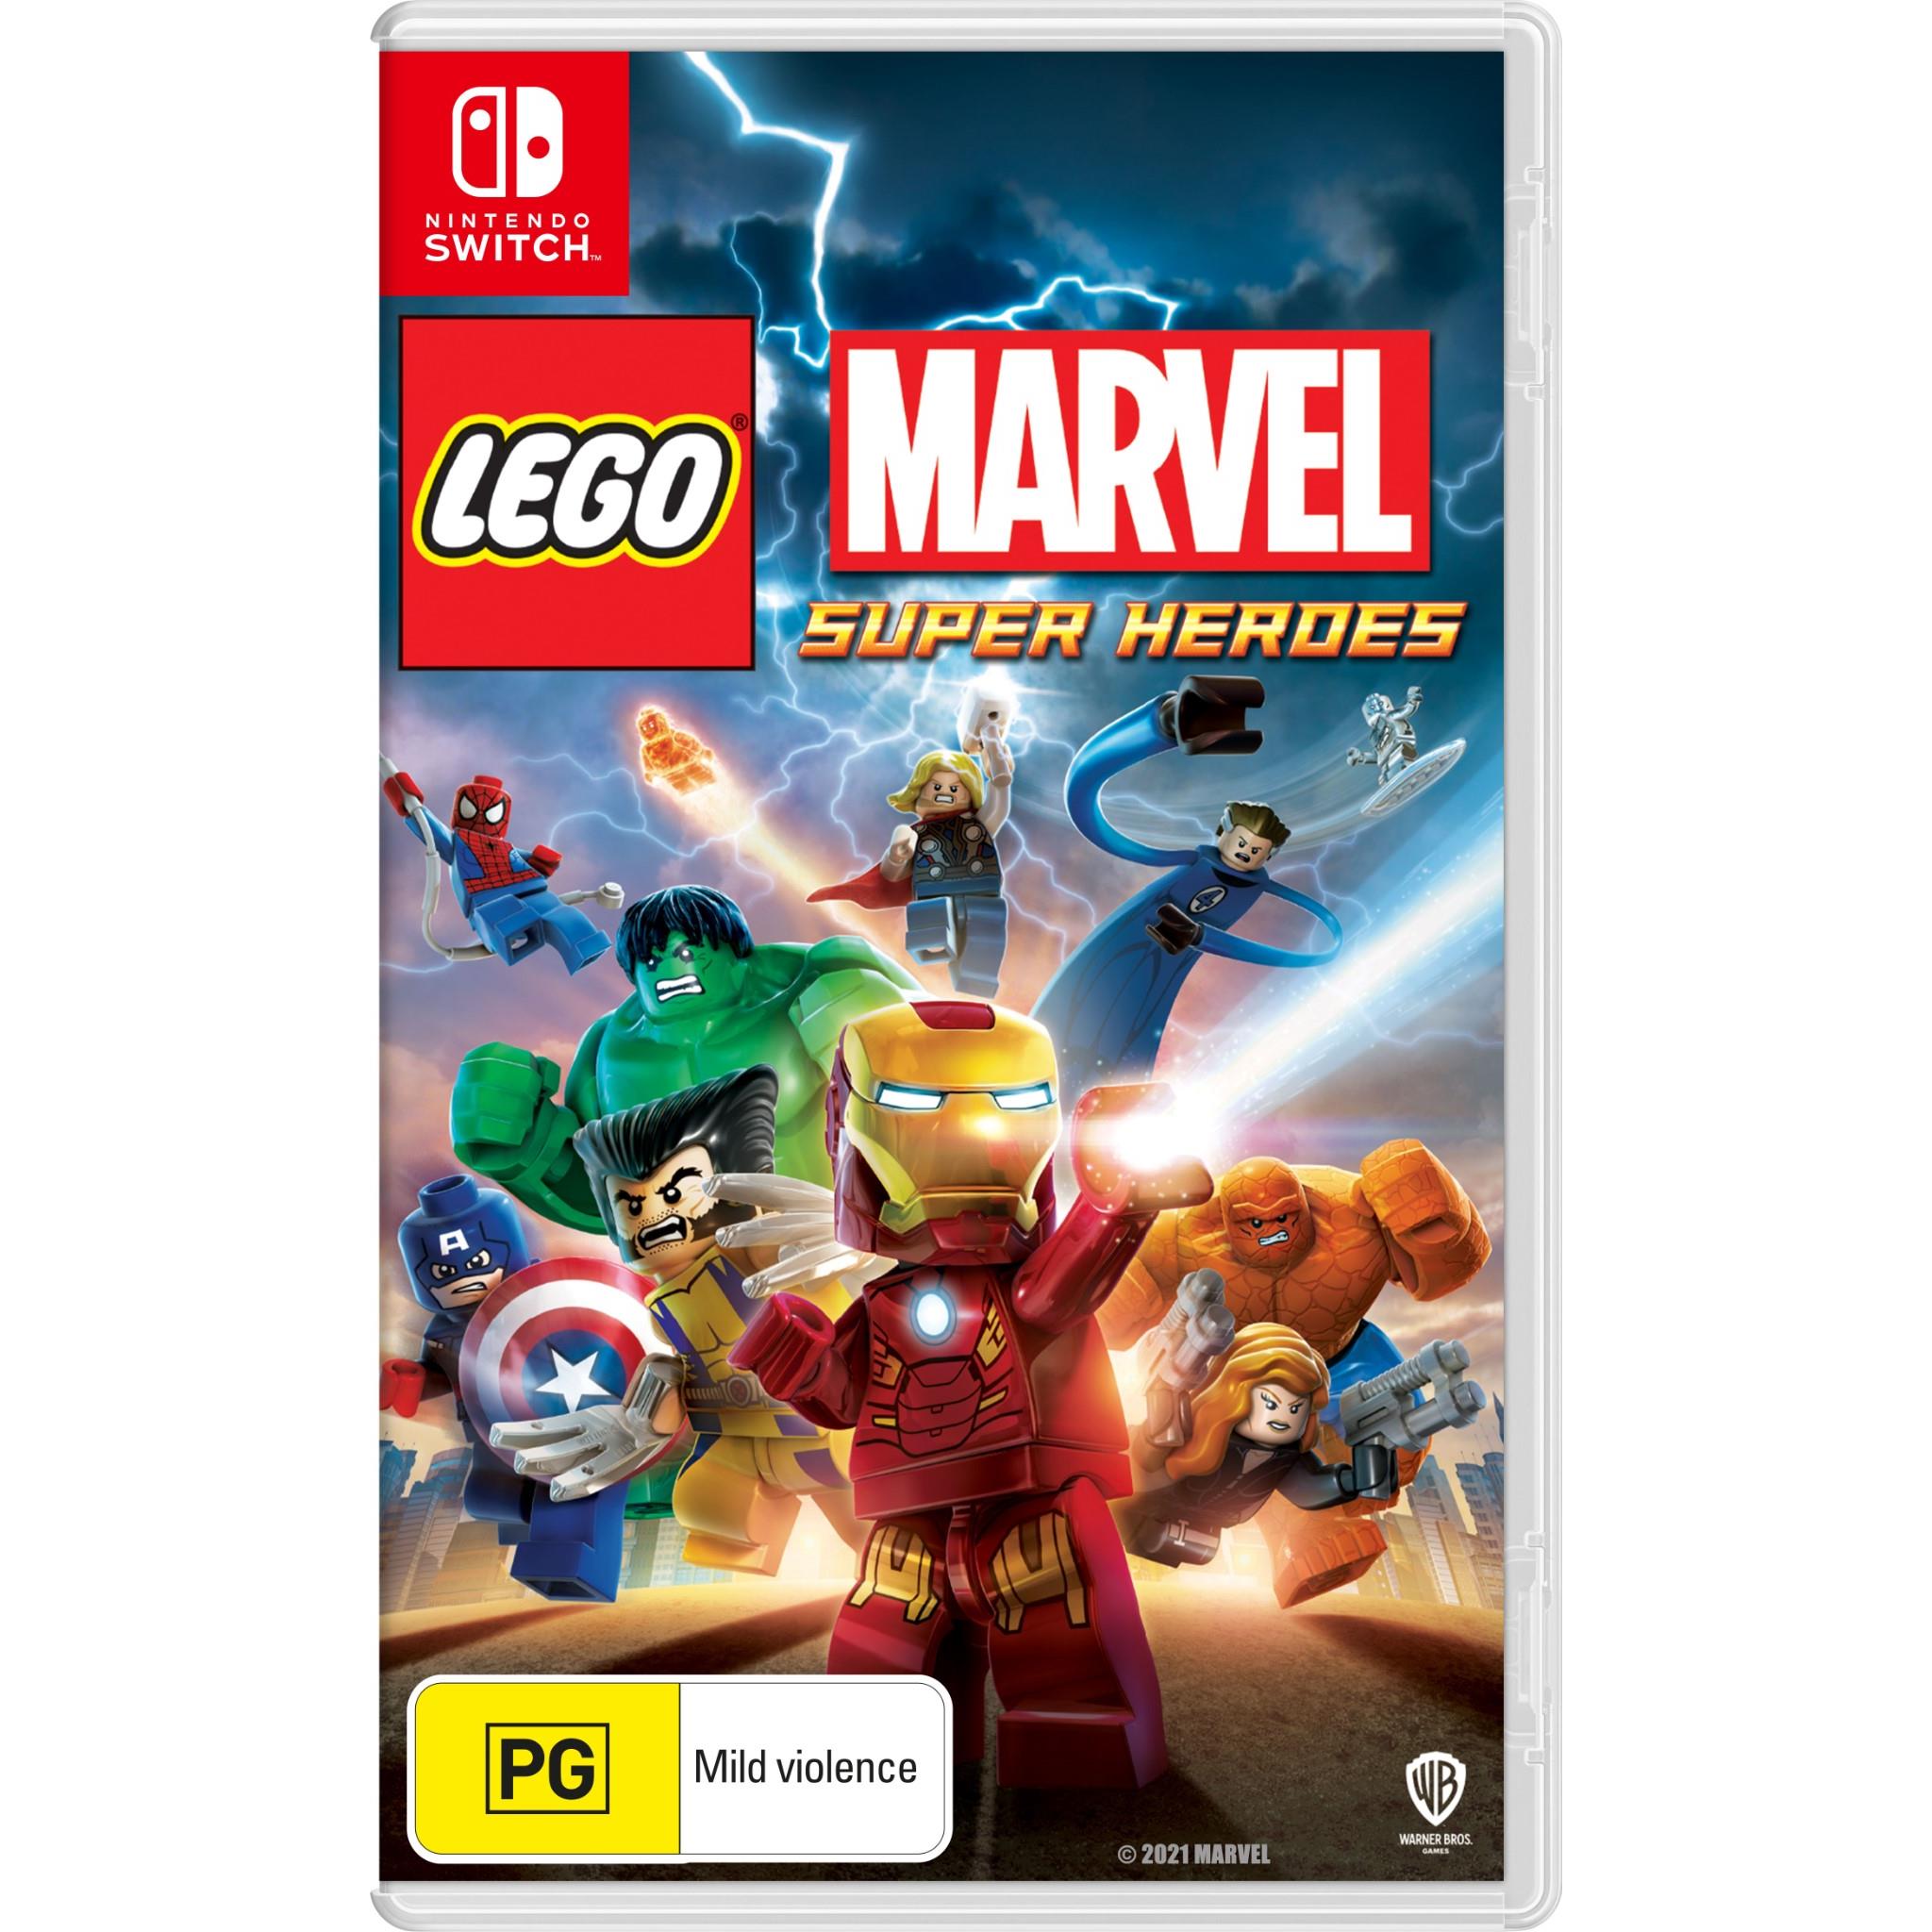 Nintendo Wii U] BNIB Lego Marvel Super Heroes Game  Marvel super heroes  game, Lego marvel super heroes, Lego marvel